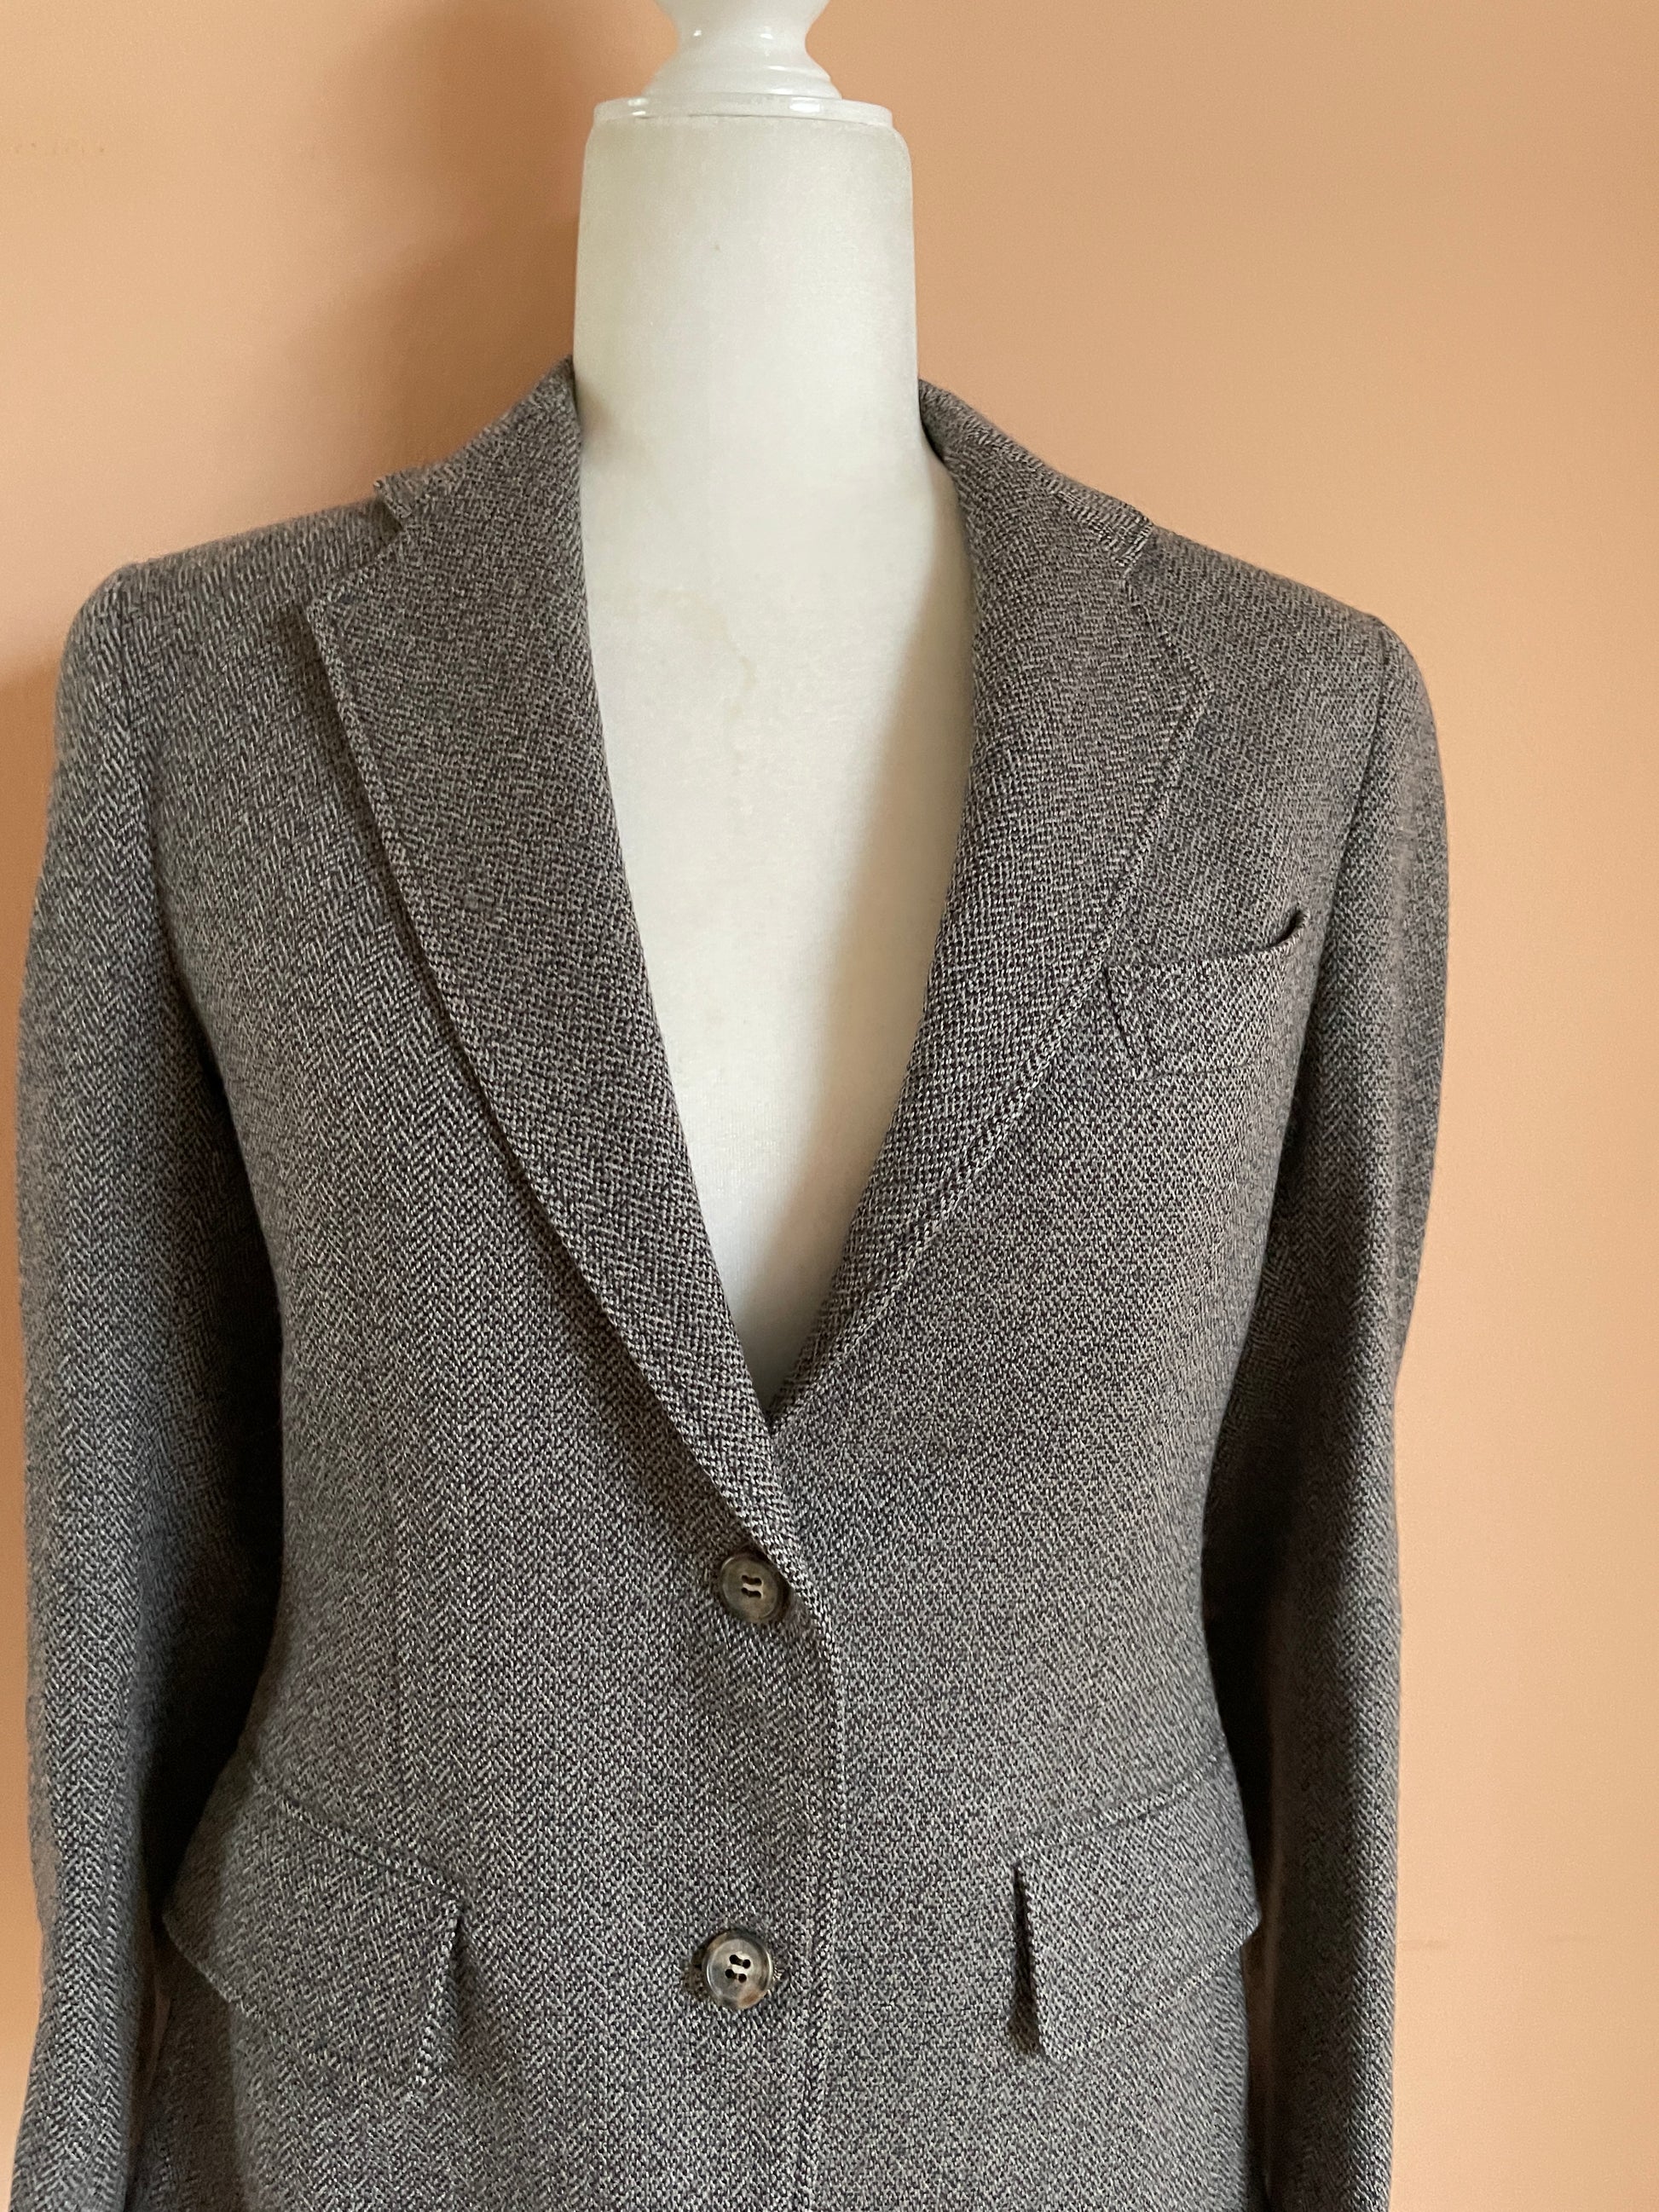  80s Wool Blend Classic Gray Blazer Jacket